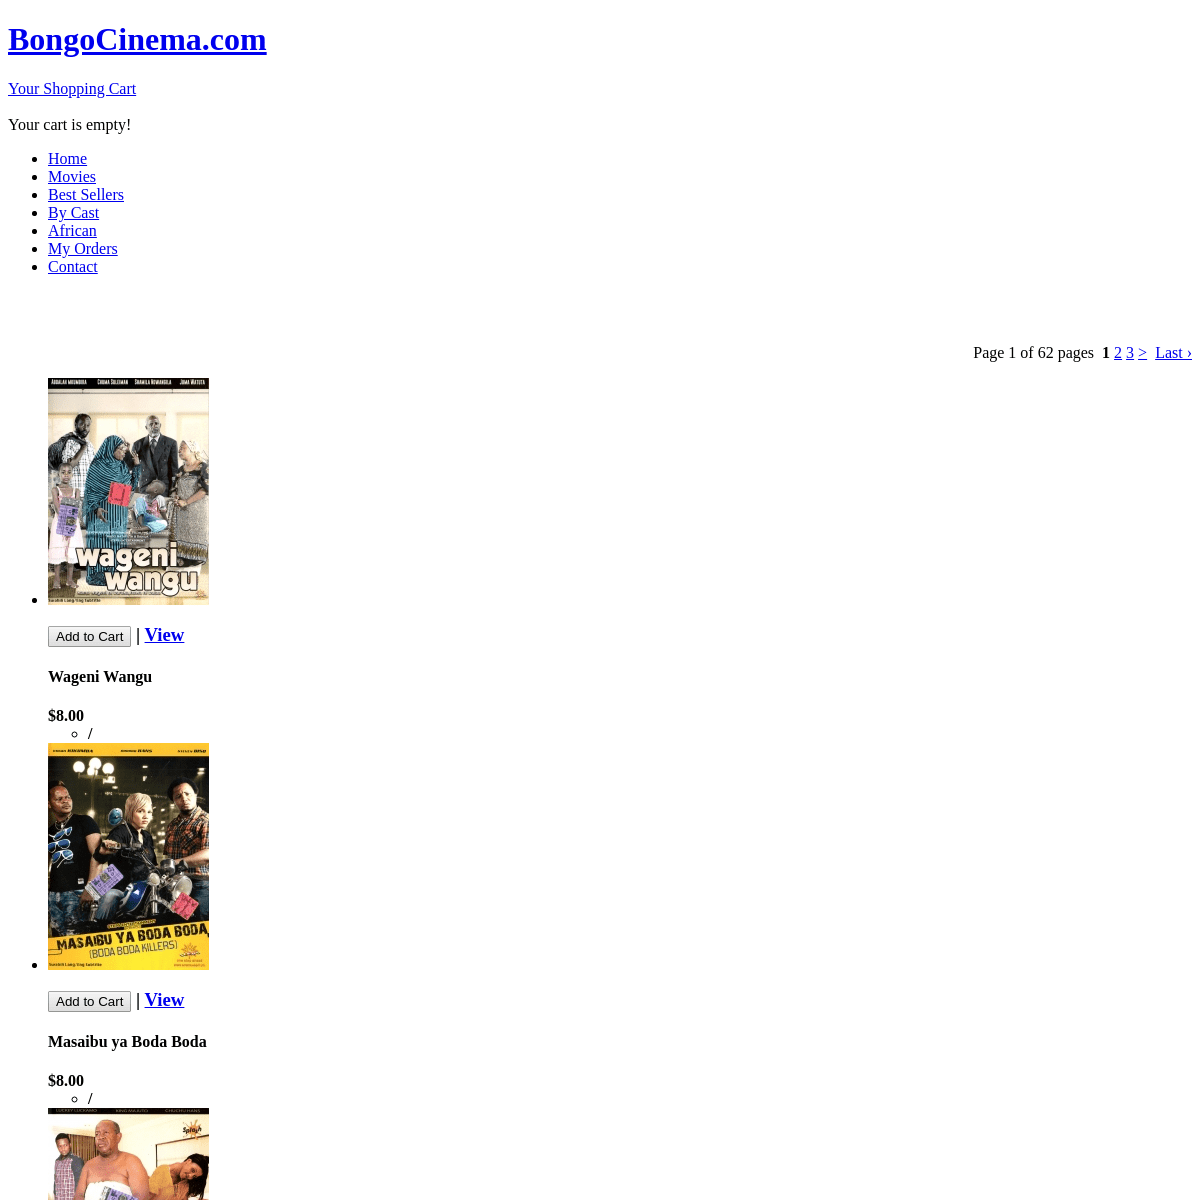 A complete backup of bongocinema.com